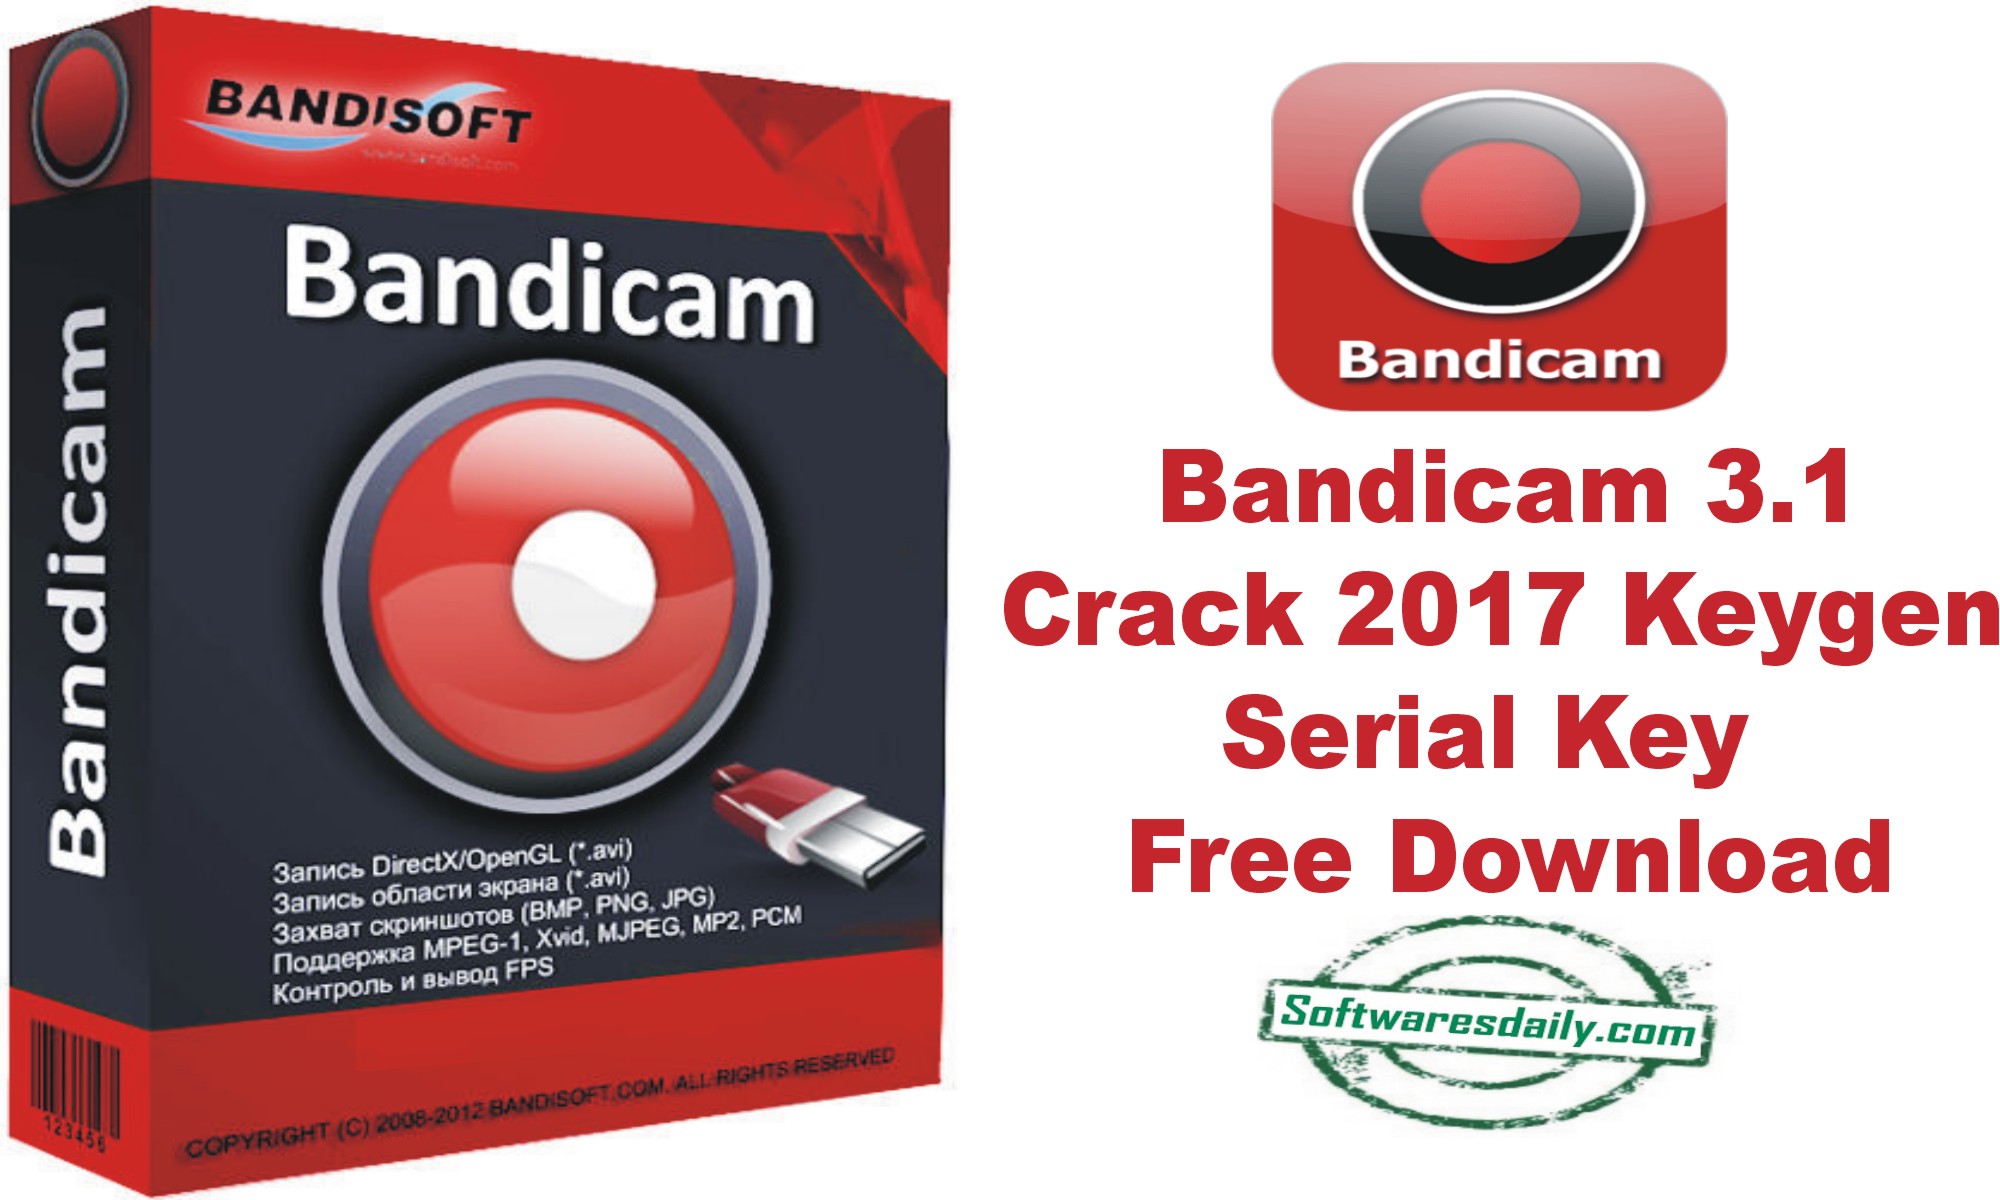 bandicam download crack 2017